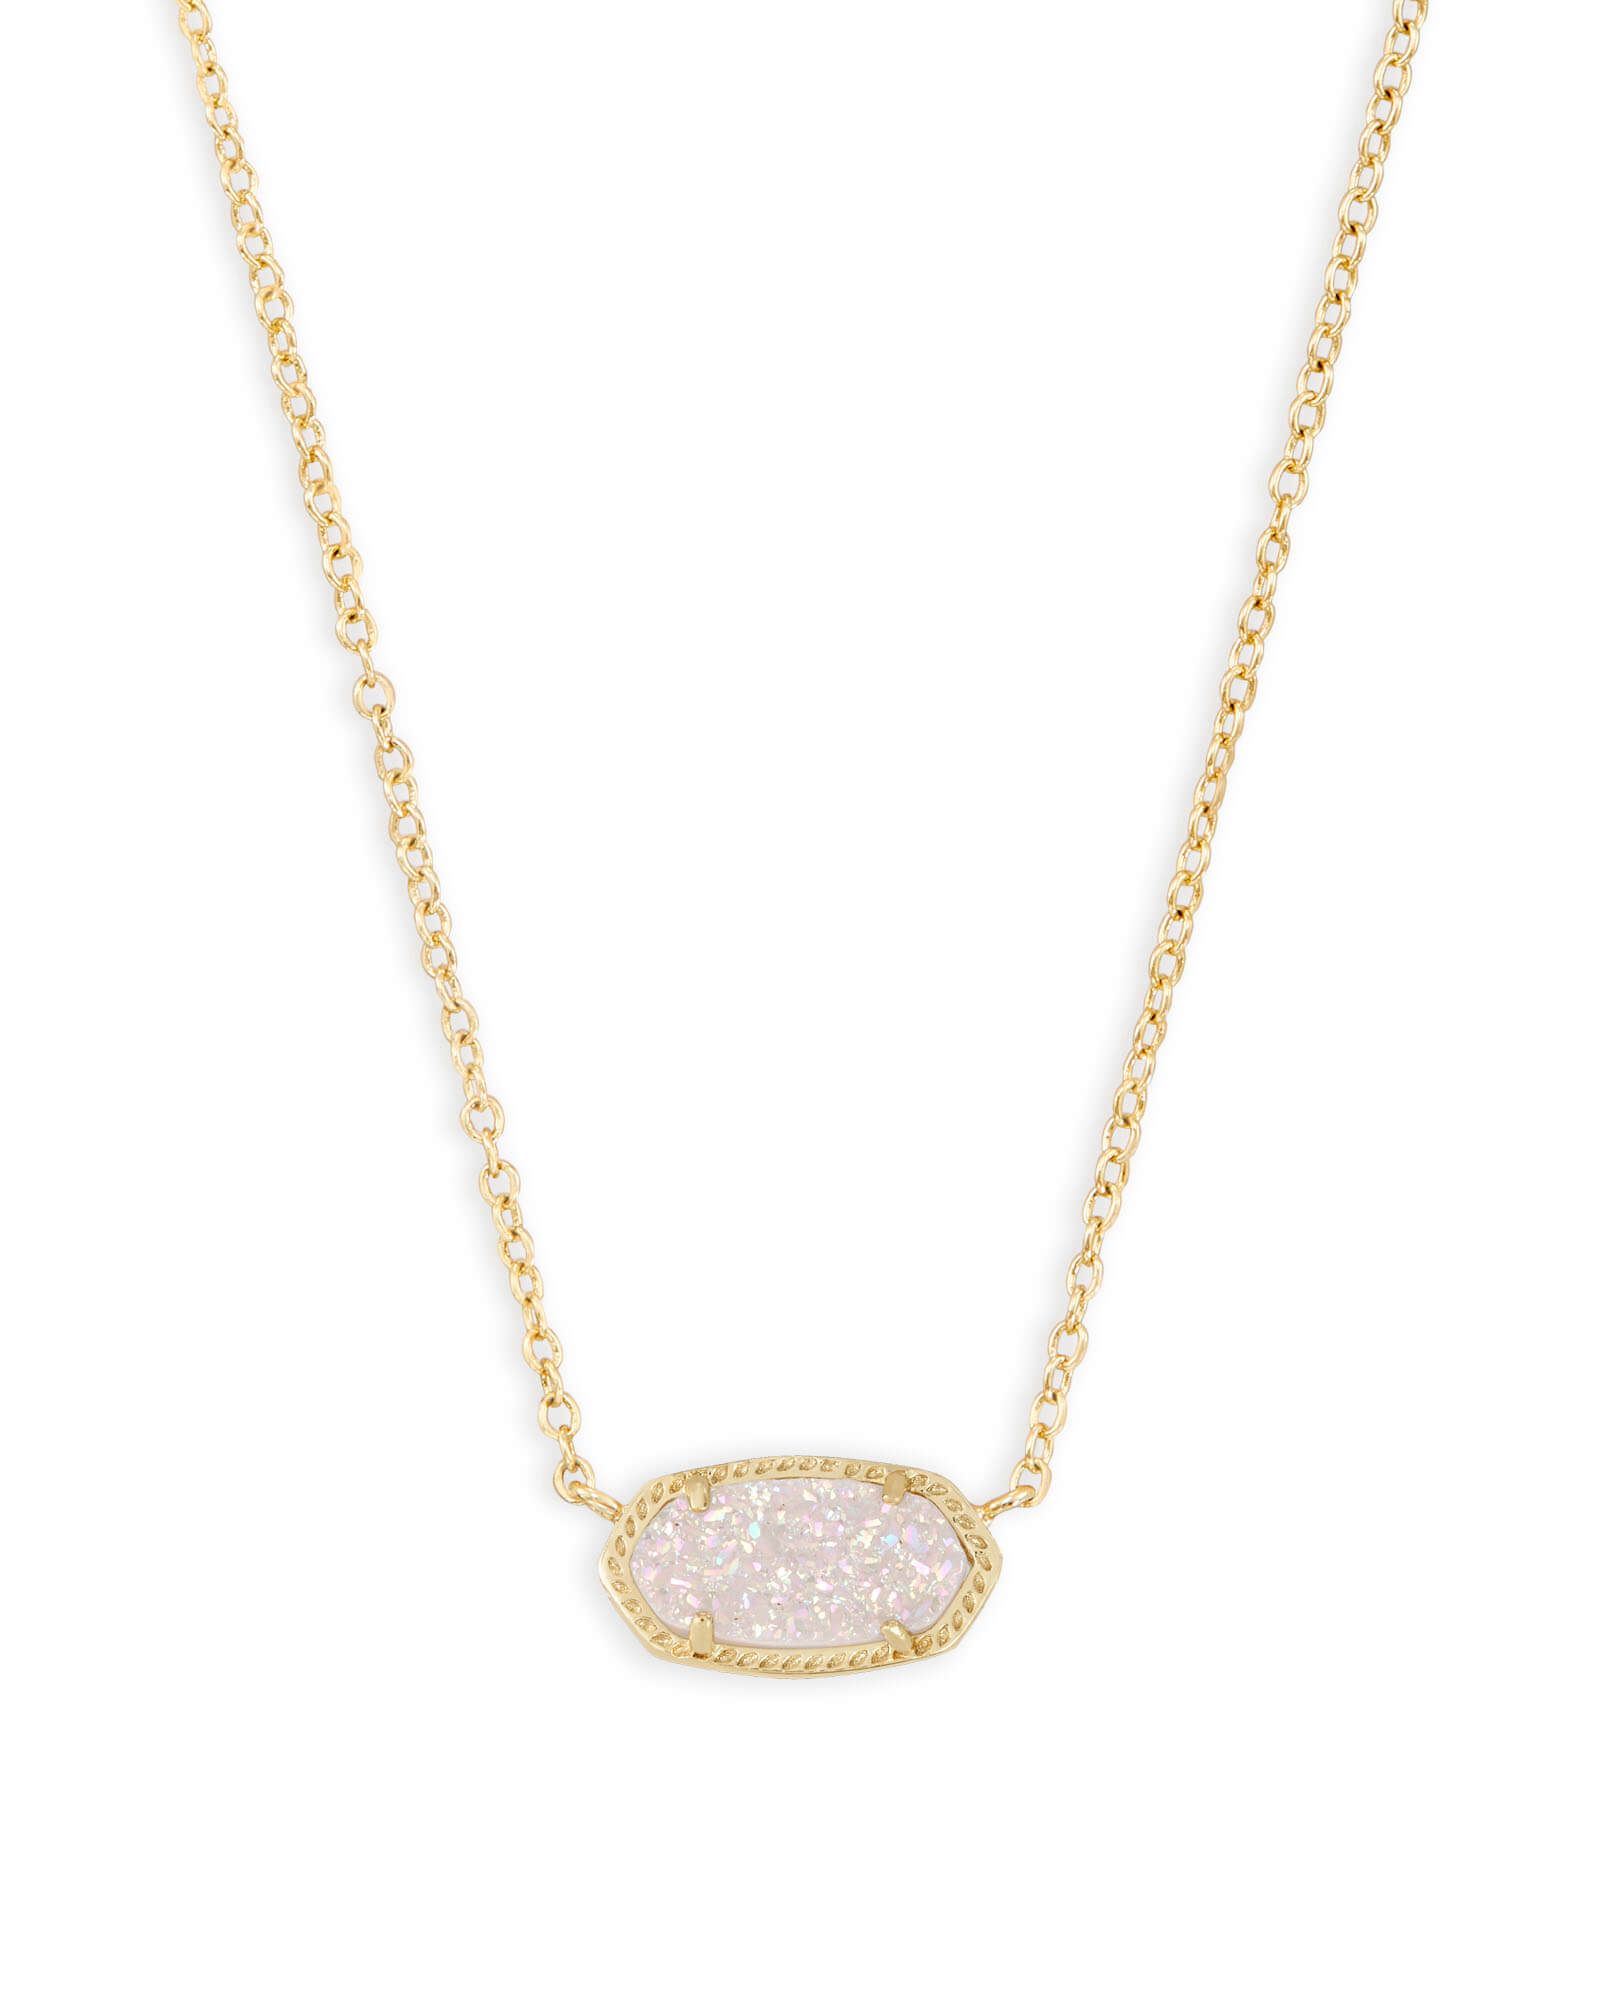 Elisa Gold Pendant Necklace in Magenta | Kendra Scott